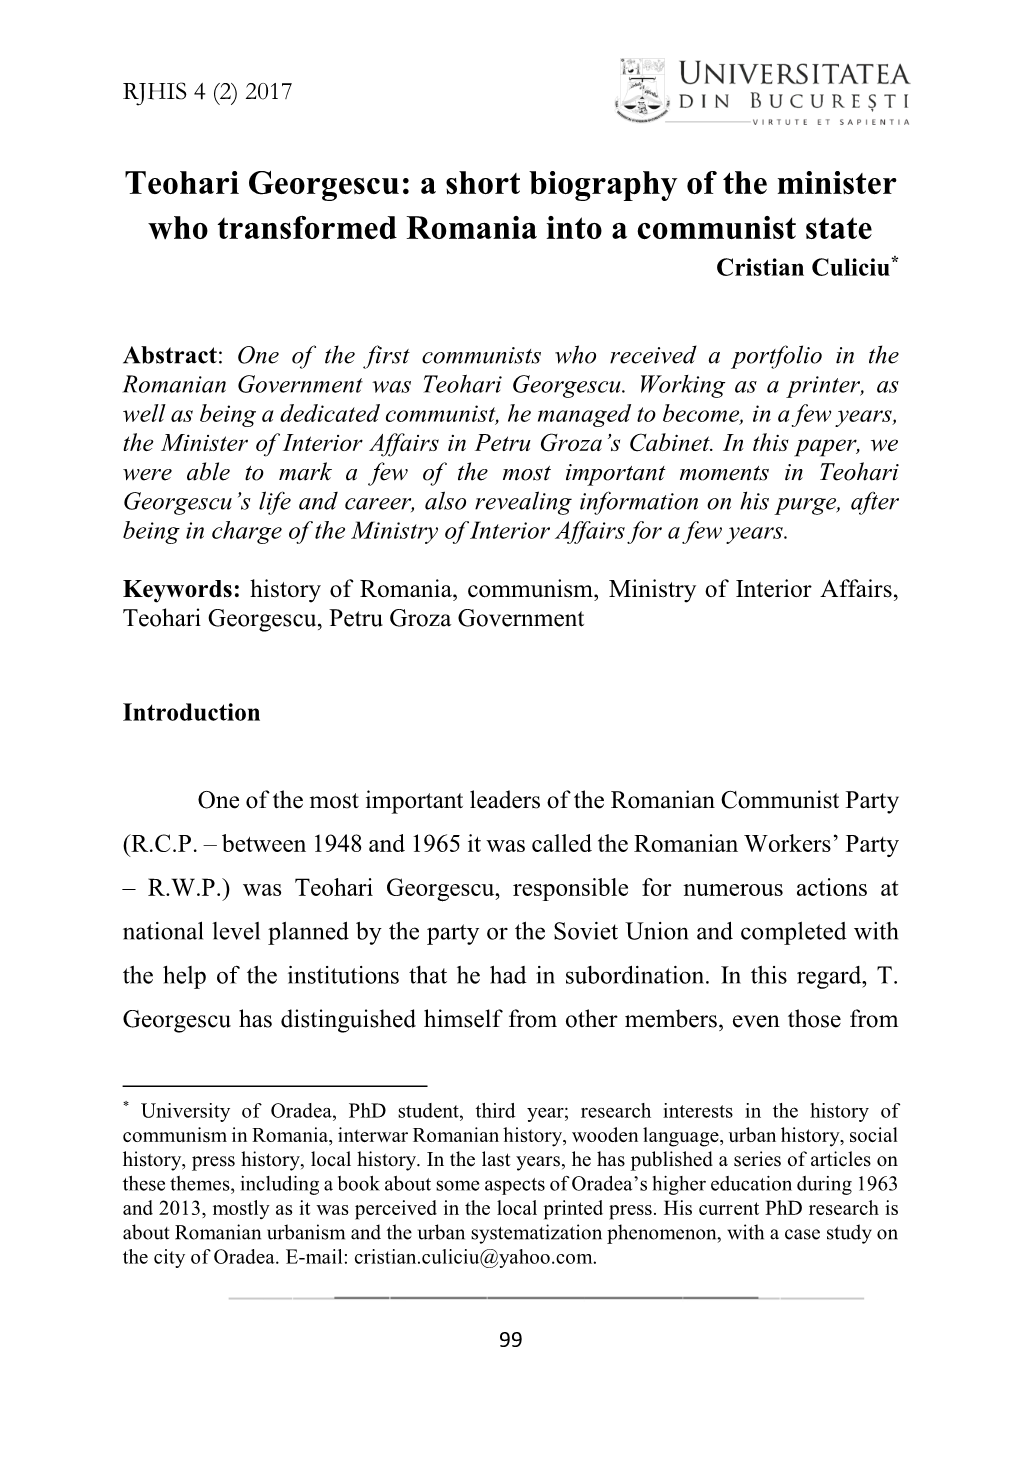 Teohari Georgescu: a Short Biography of the Minister Who Transformed Romania Into a Communist State Cristian Culiciu*